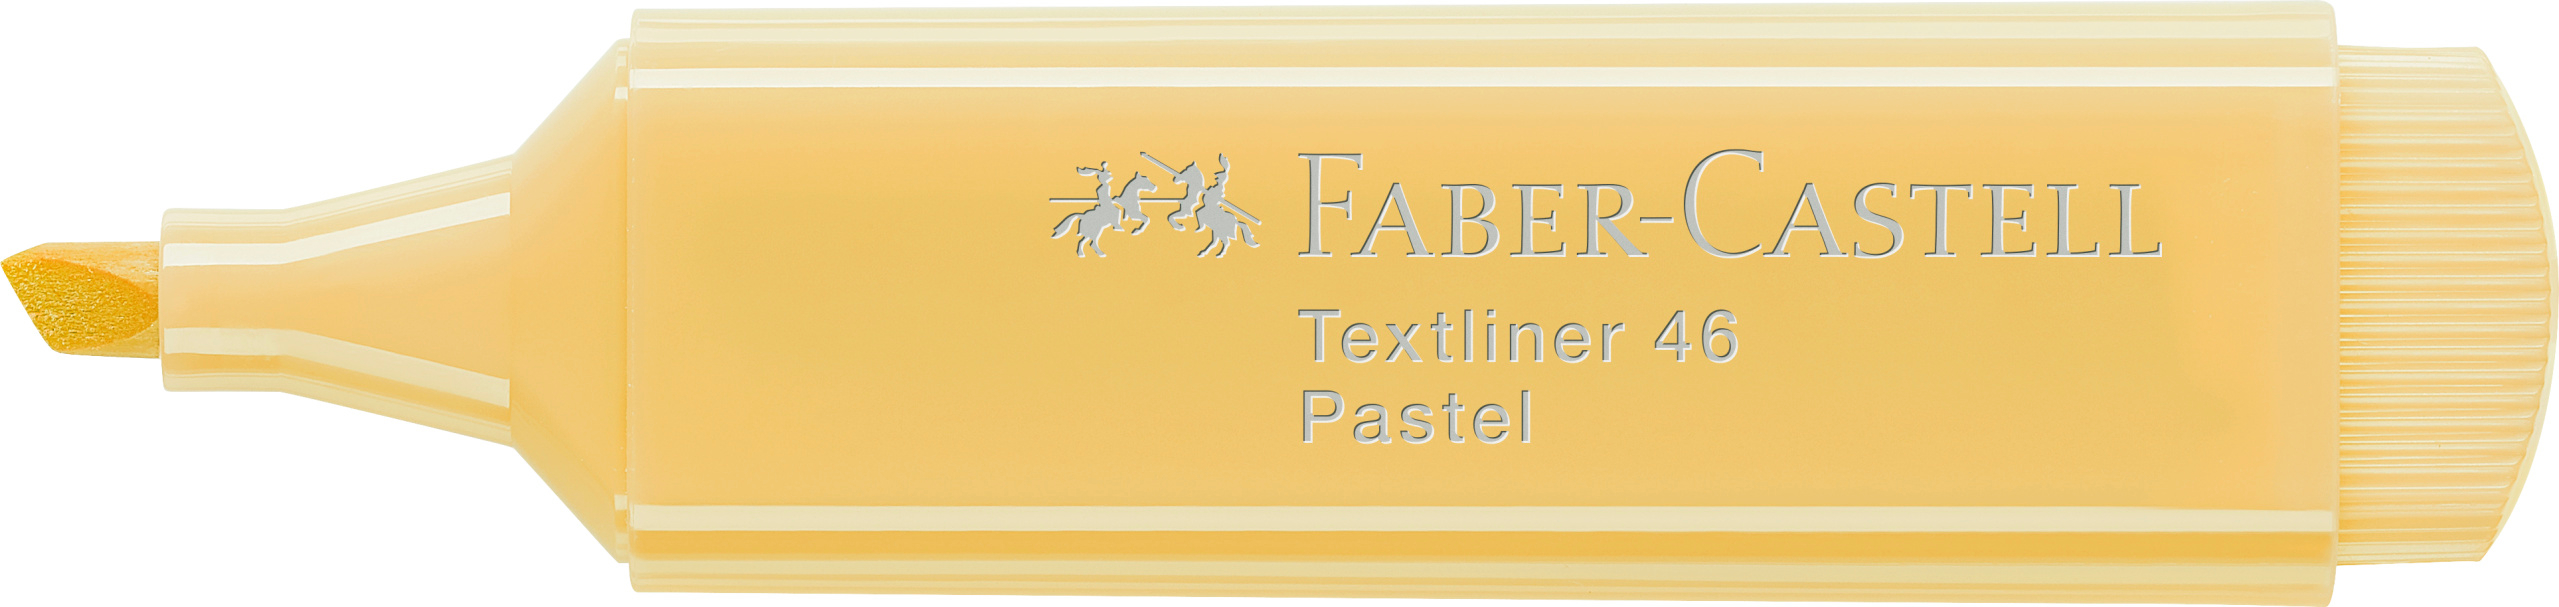 FABER-CASTELL Textliner Pastell 46 1/2/5mm 154667 vanille